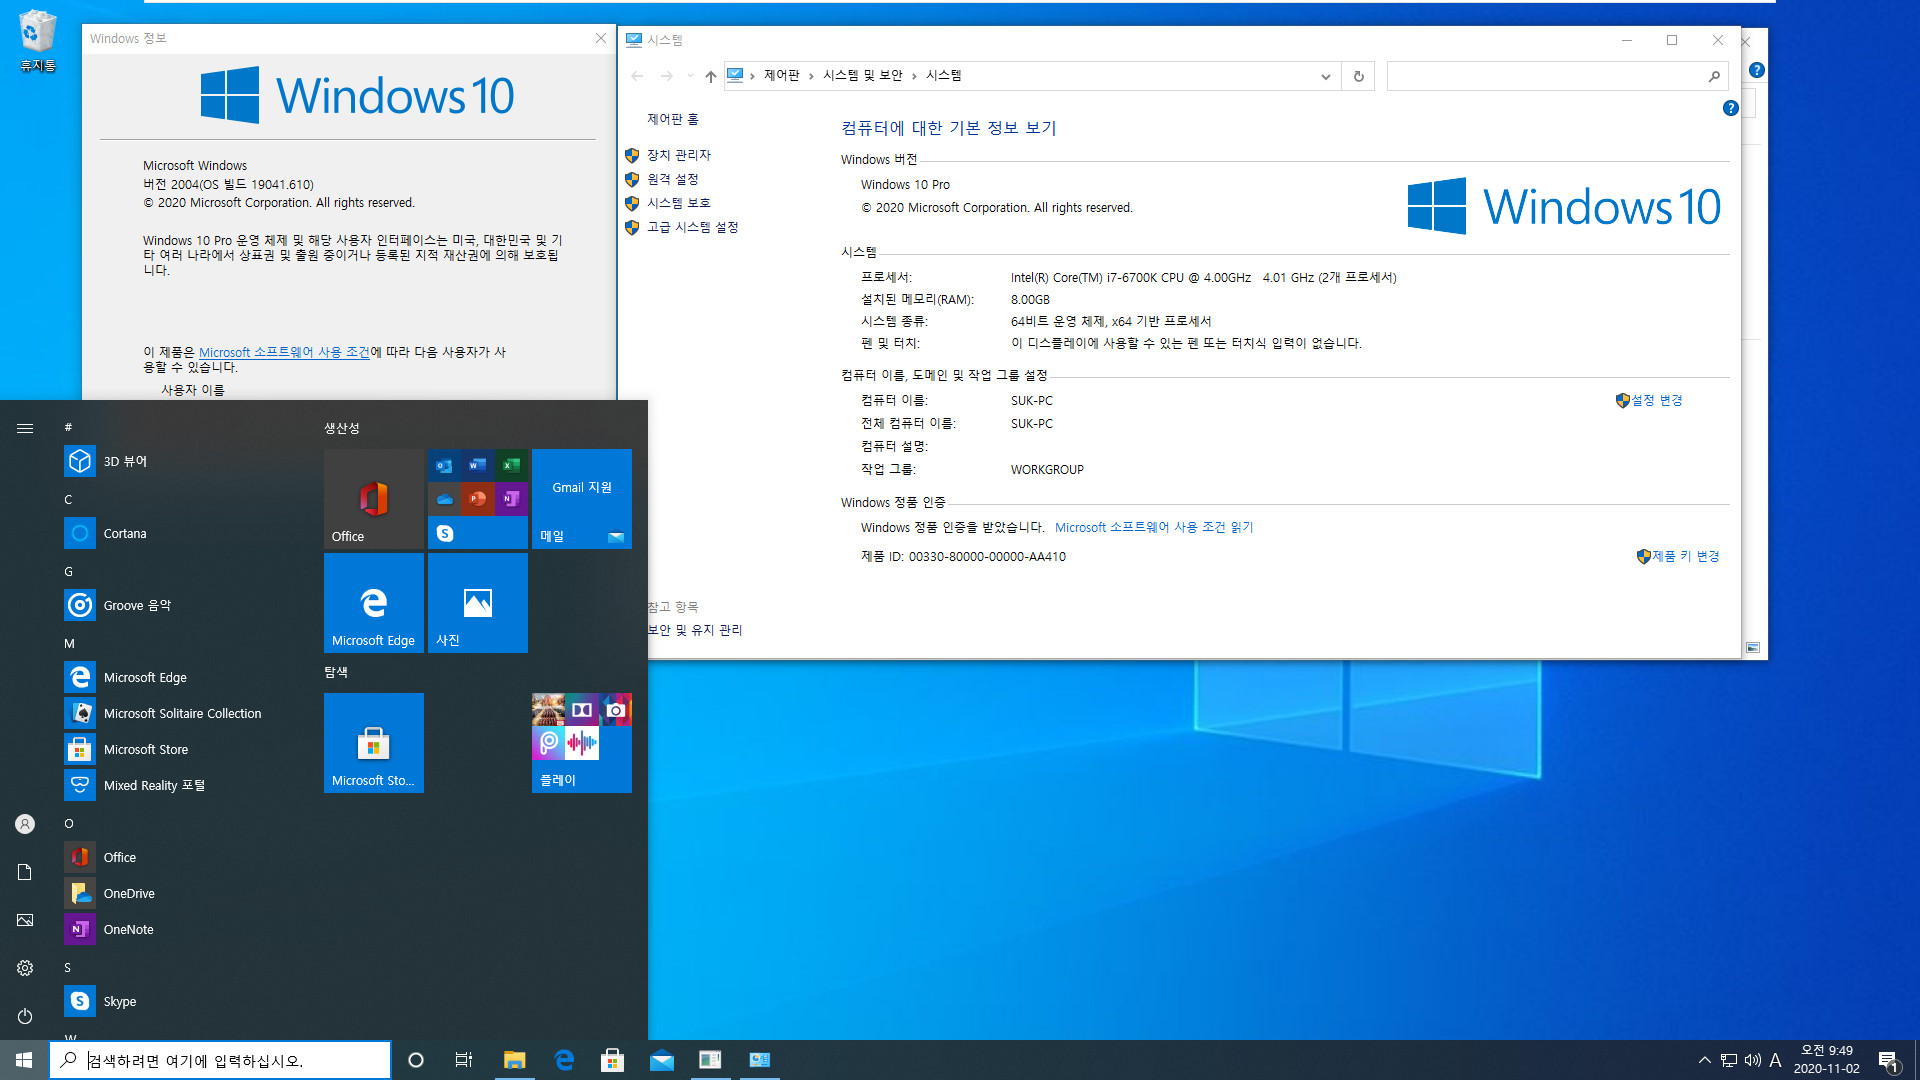 Windows 10 버전 20H2 기능 업데이트 KB4562830 폴더의 mum 파일들만 찾아서 설치하기.bat - 크로미엄 엣지 설치하지 않고 버전 20H2만 설치하기 테스트 2020-11-02_094902.jpg